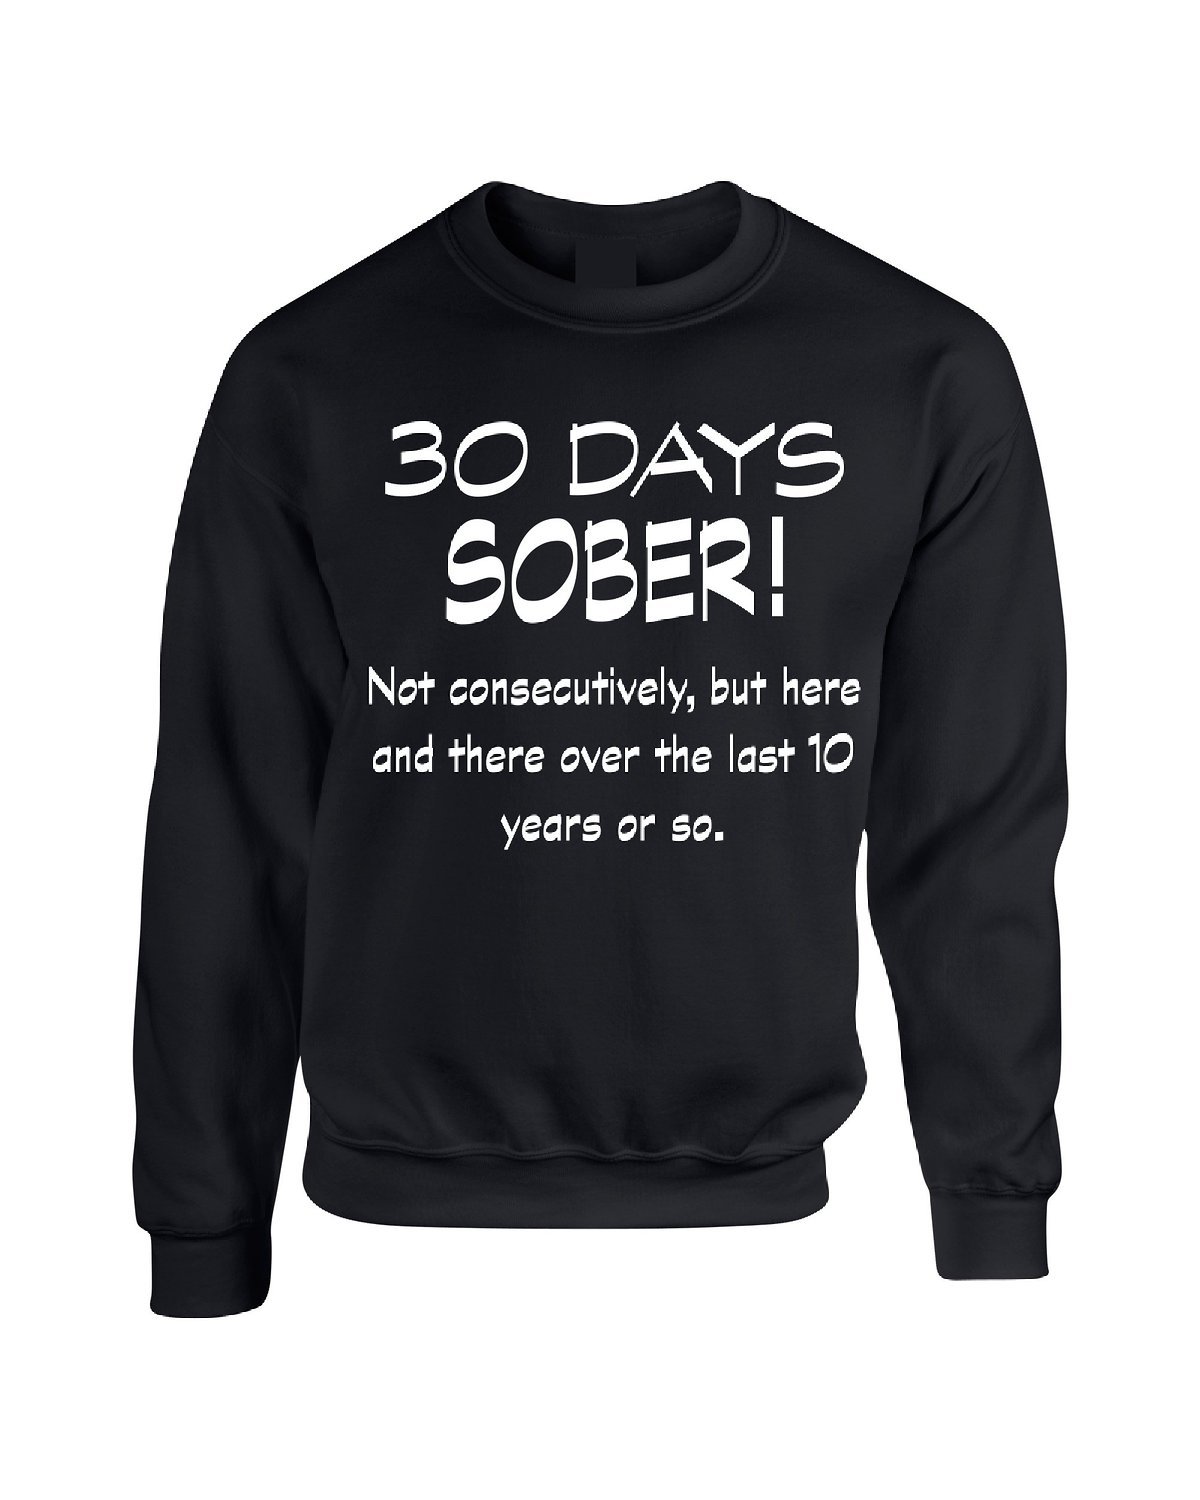 Adult Crewneck Sweatshirt 30 Days Sober Drinking Shirt Funny Top - $17.94